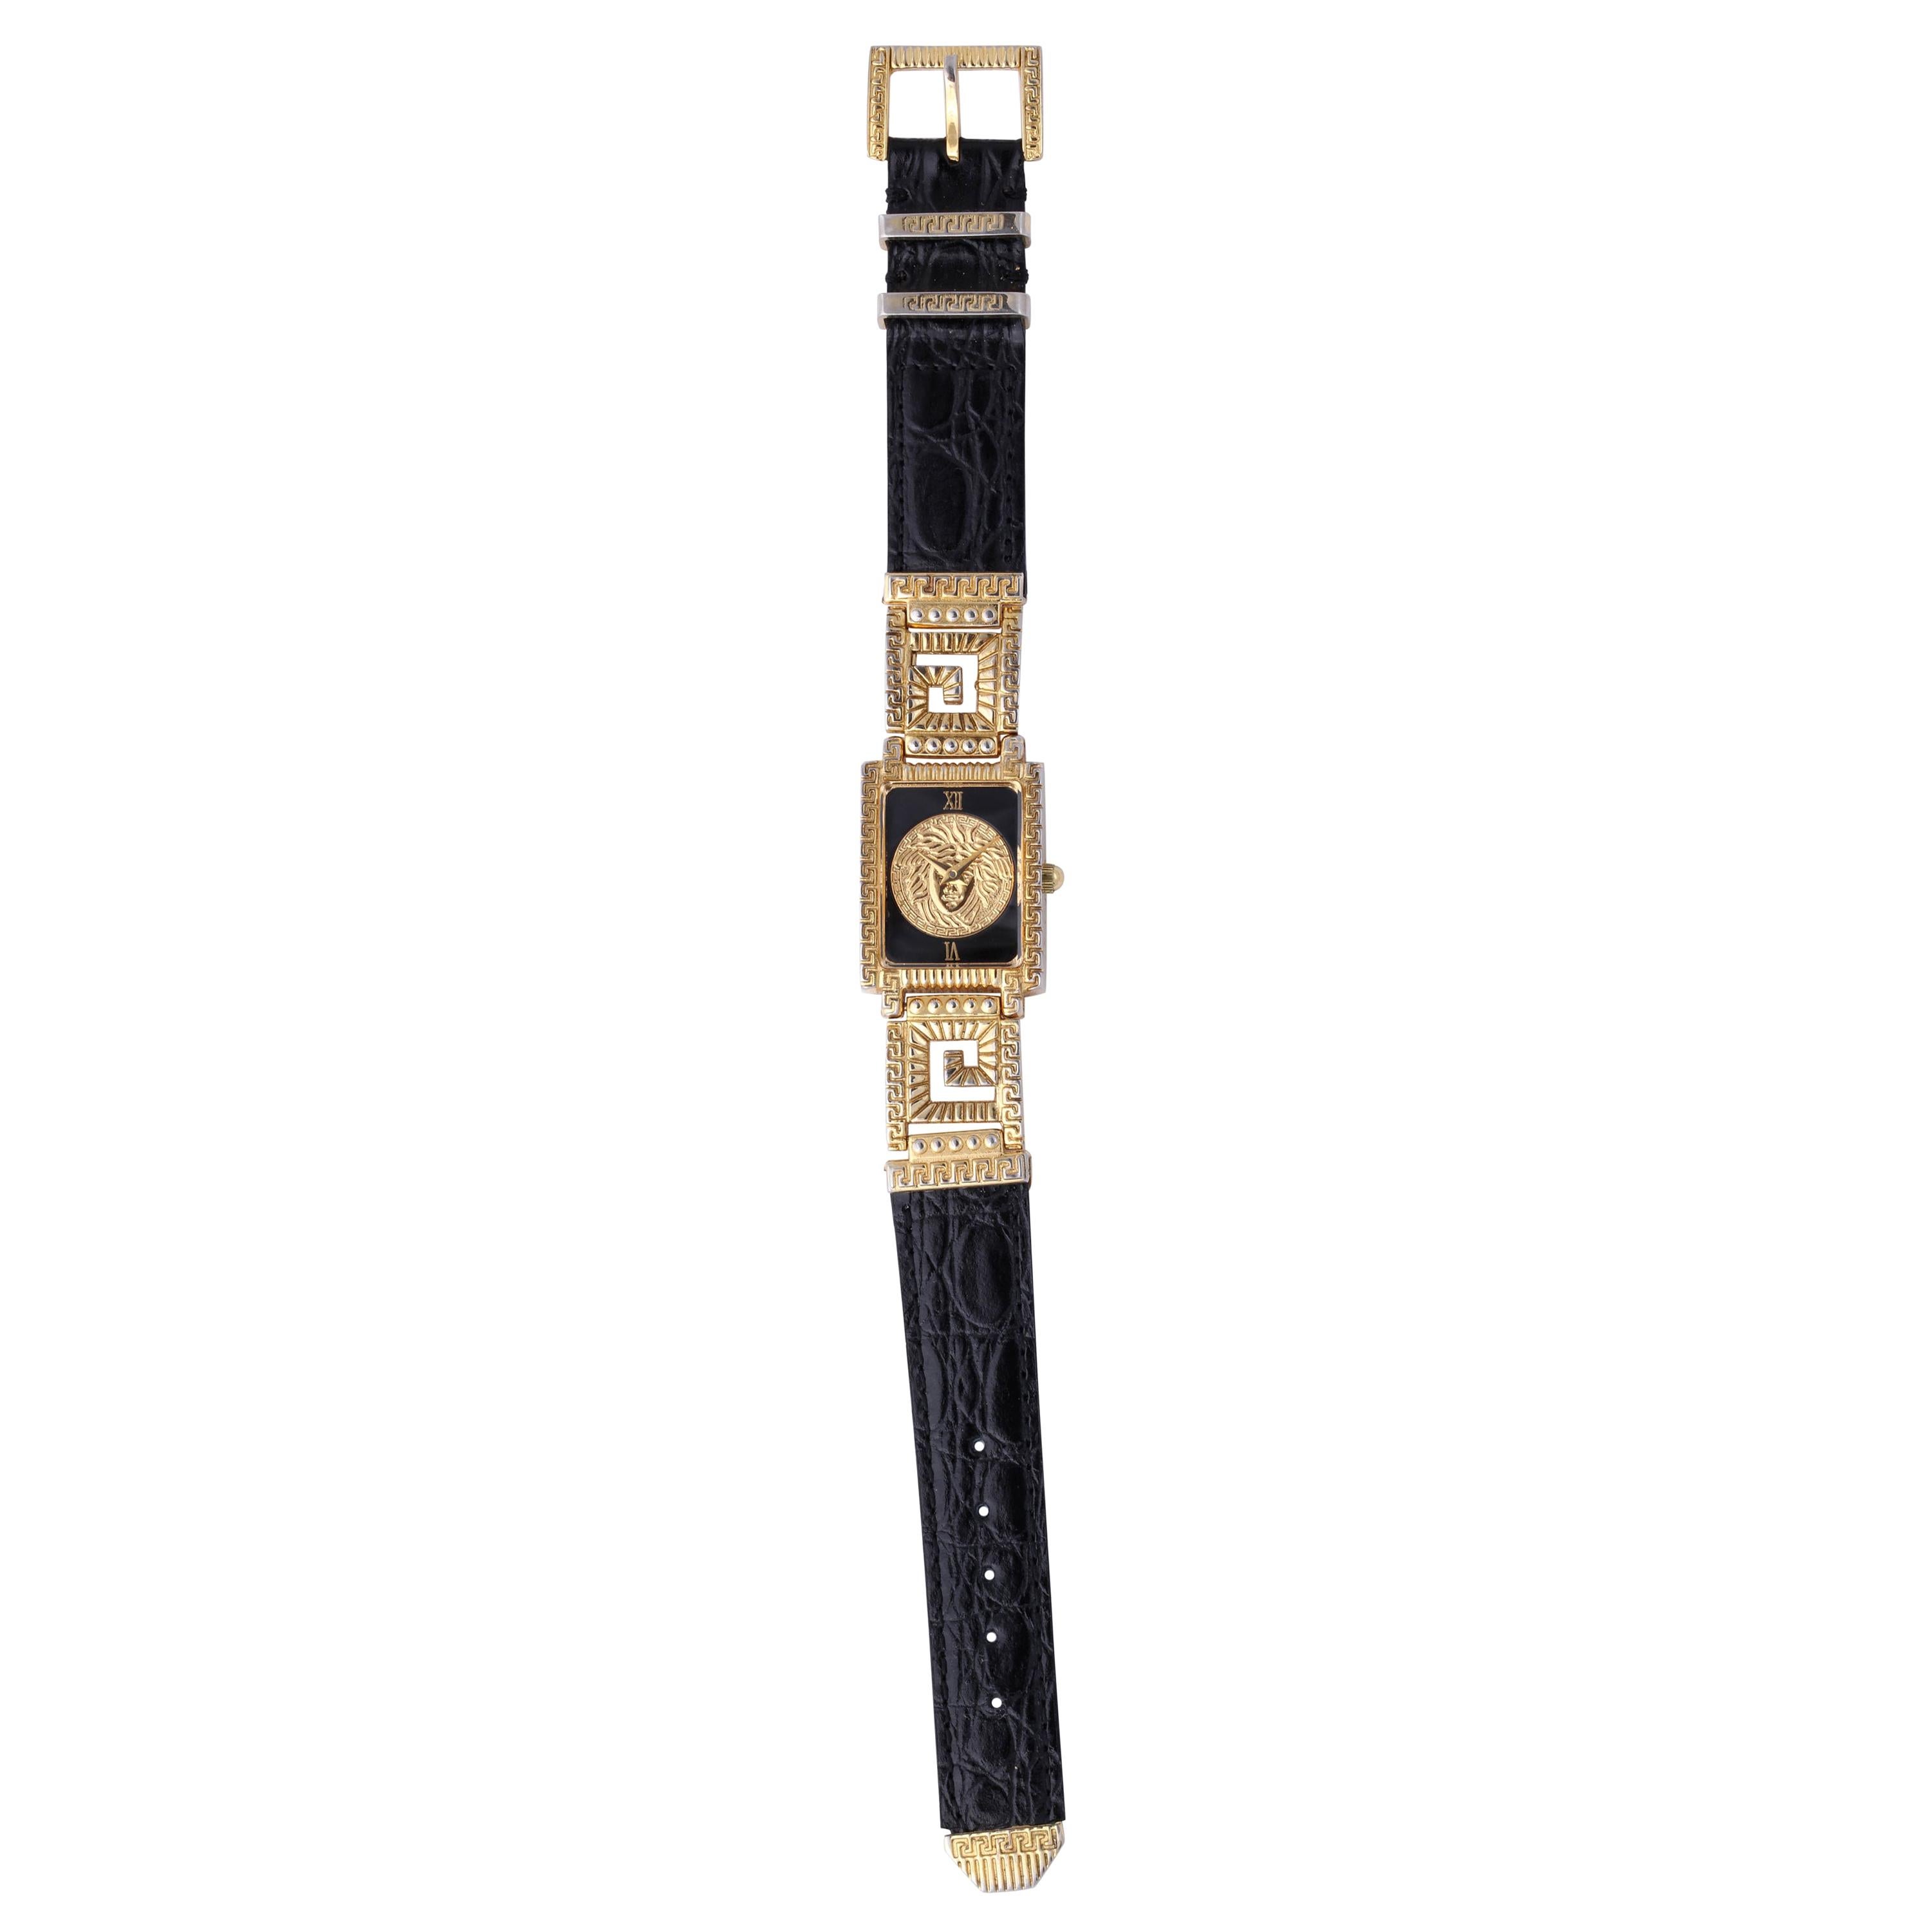   Gianni Versace Medusa Watch with Greek Key Motifs  For Sale